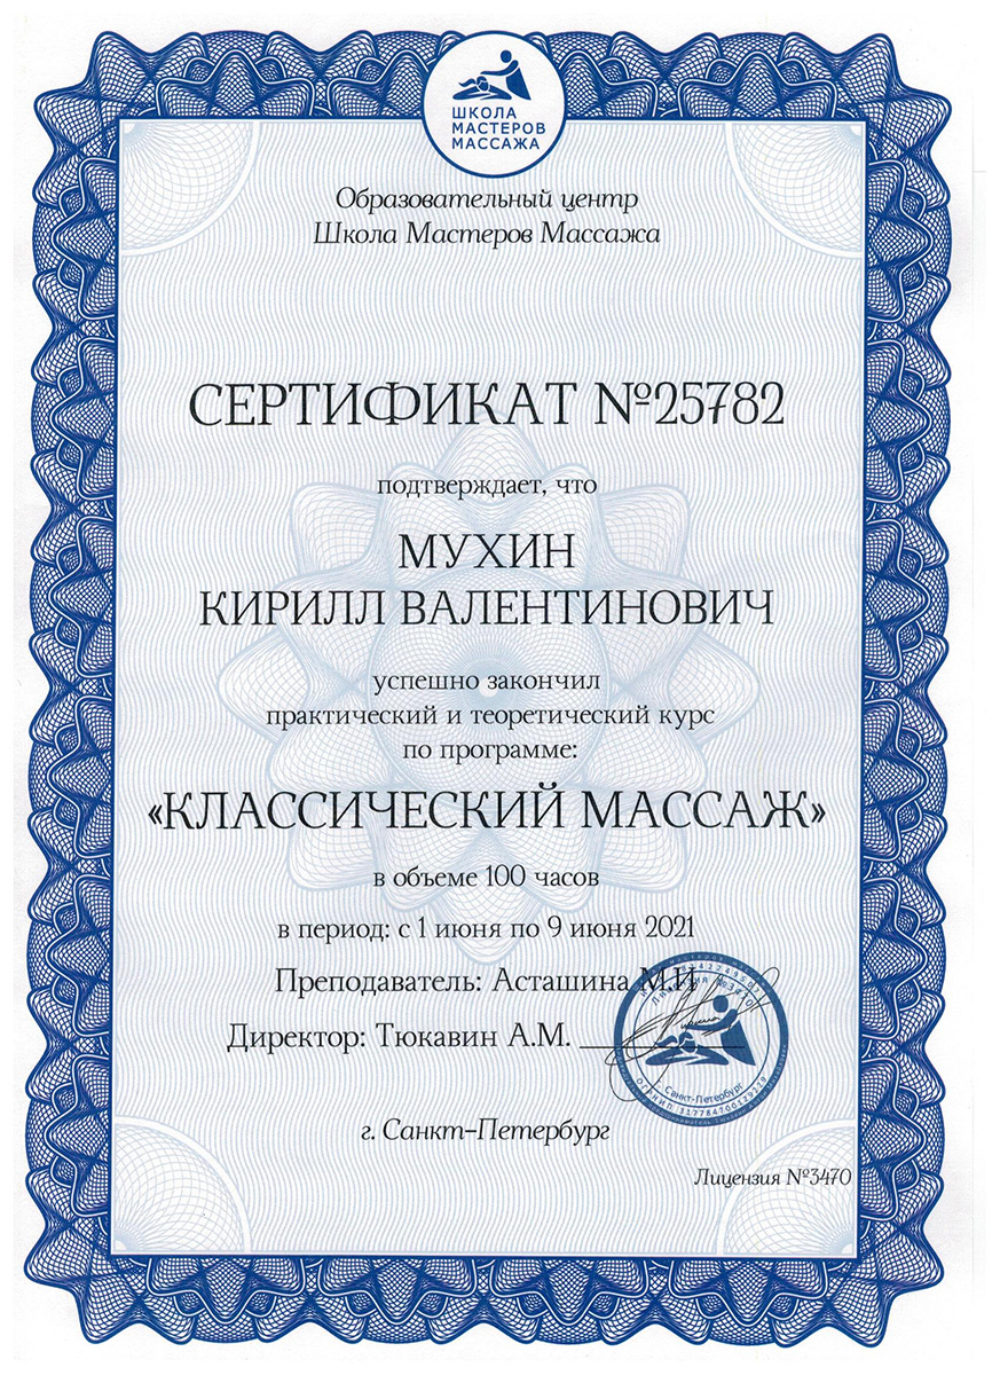 Сертификат - Курс по программе "Классический массаж". Мухин Кирилл Валентинович